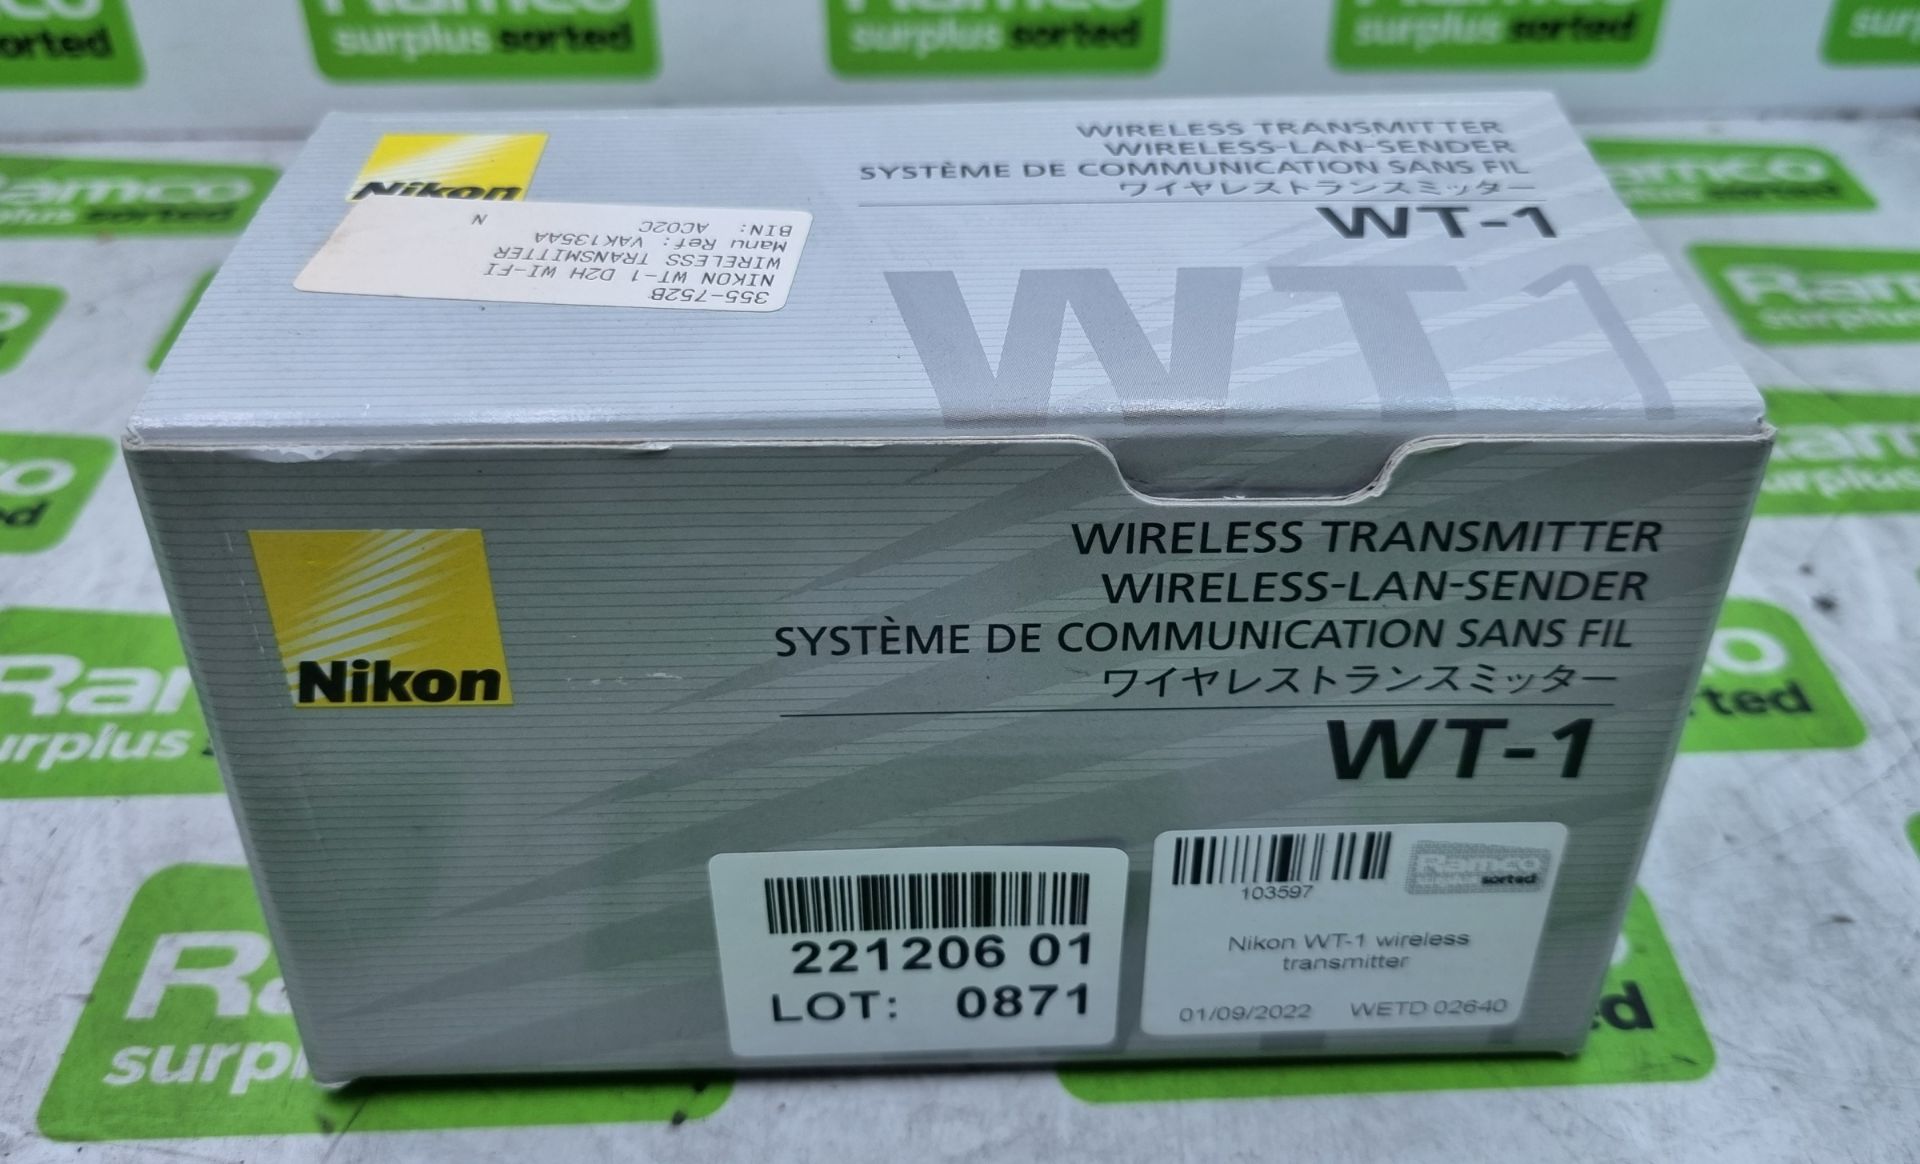 Nikon WT-1 wireless transmitter - Image 4 of 4